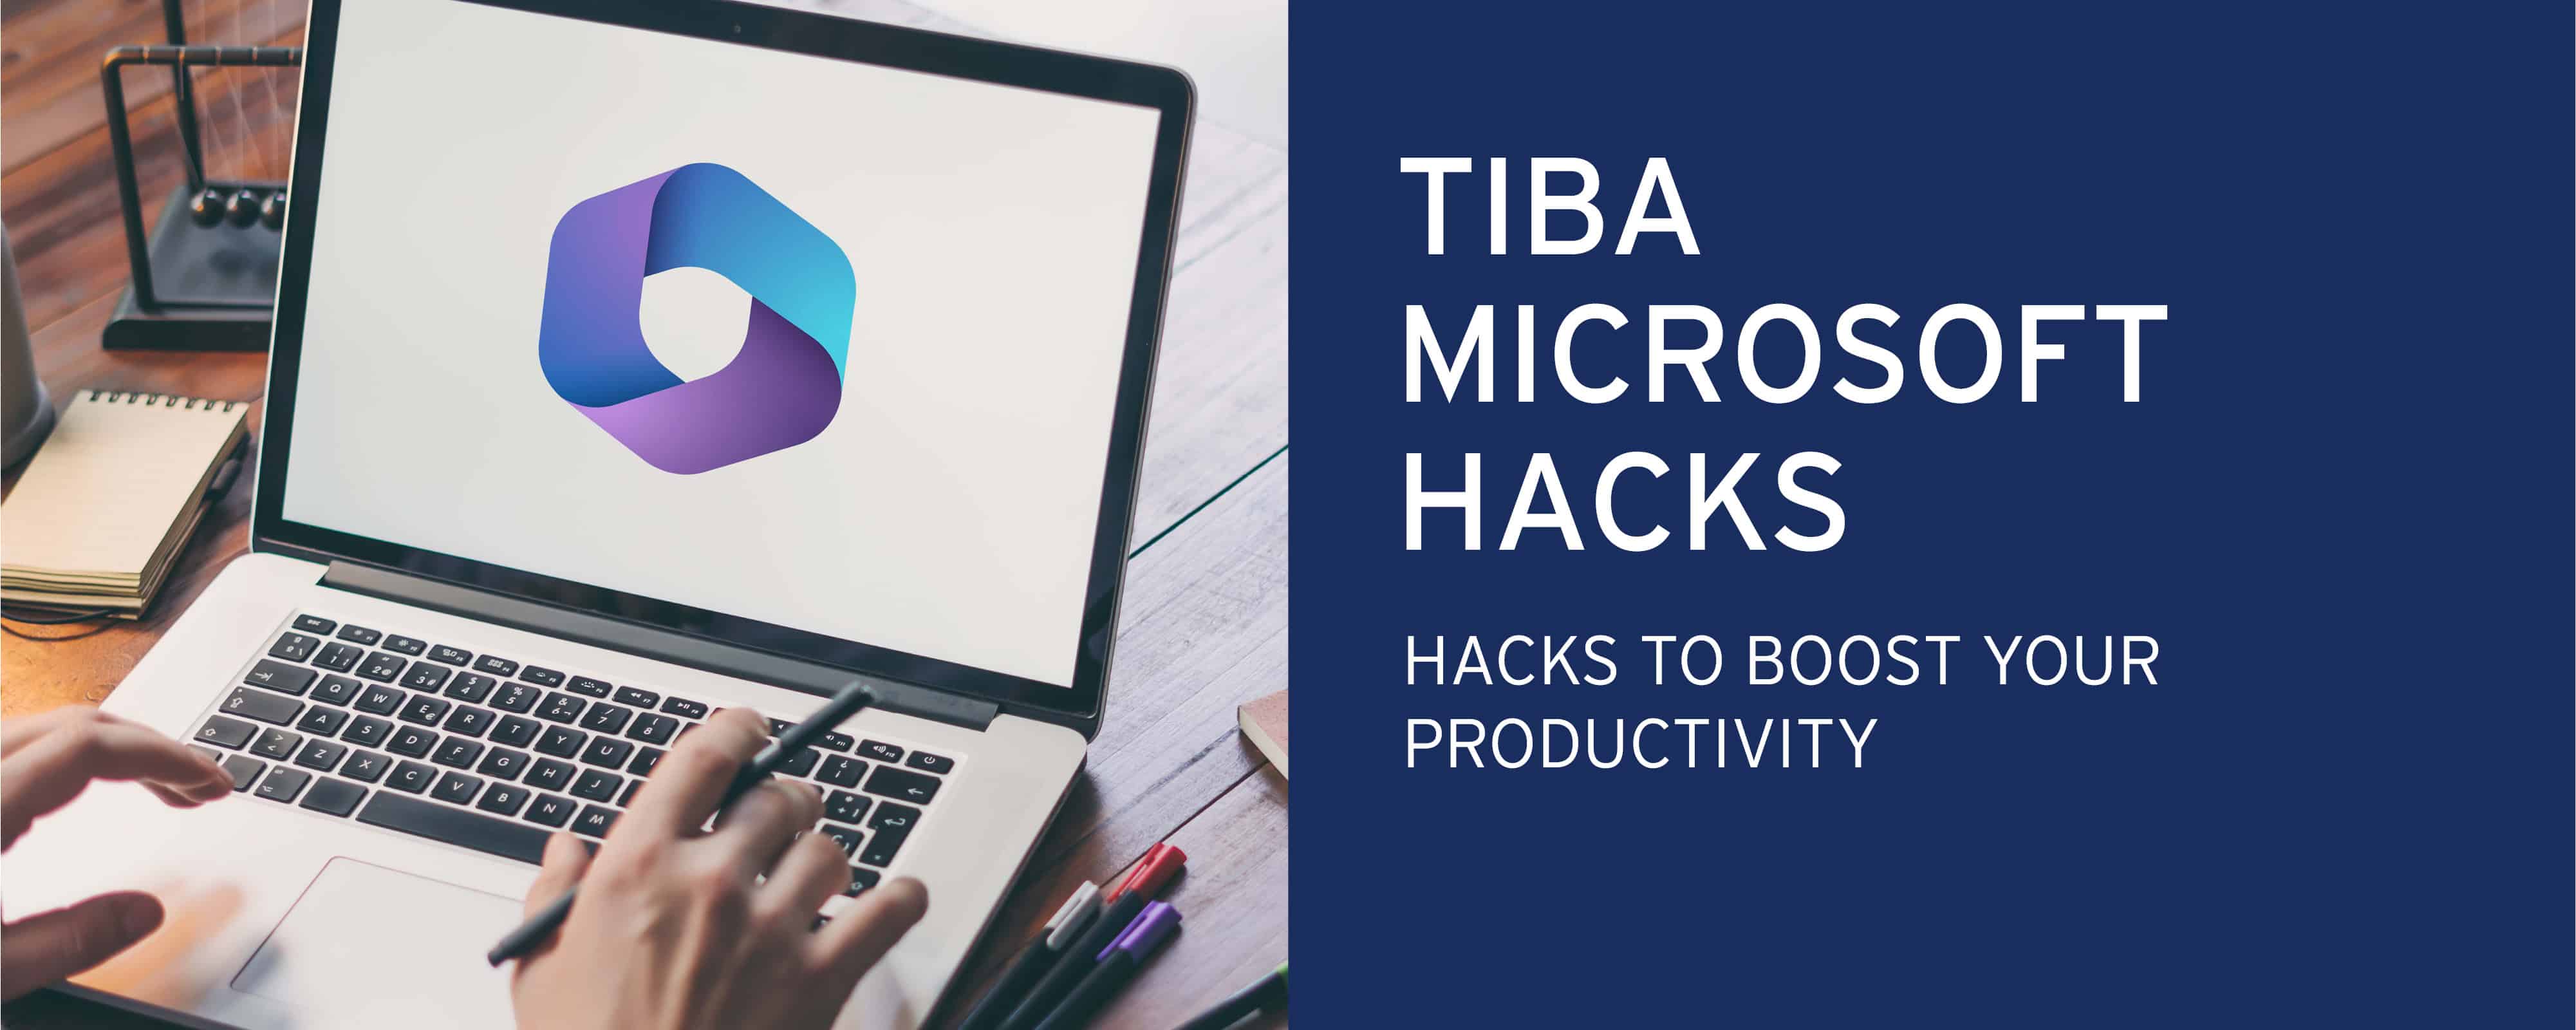 Header - Tiba Microsoft Hacks